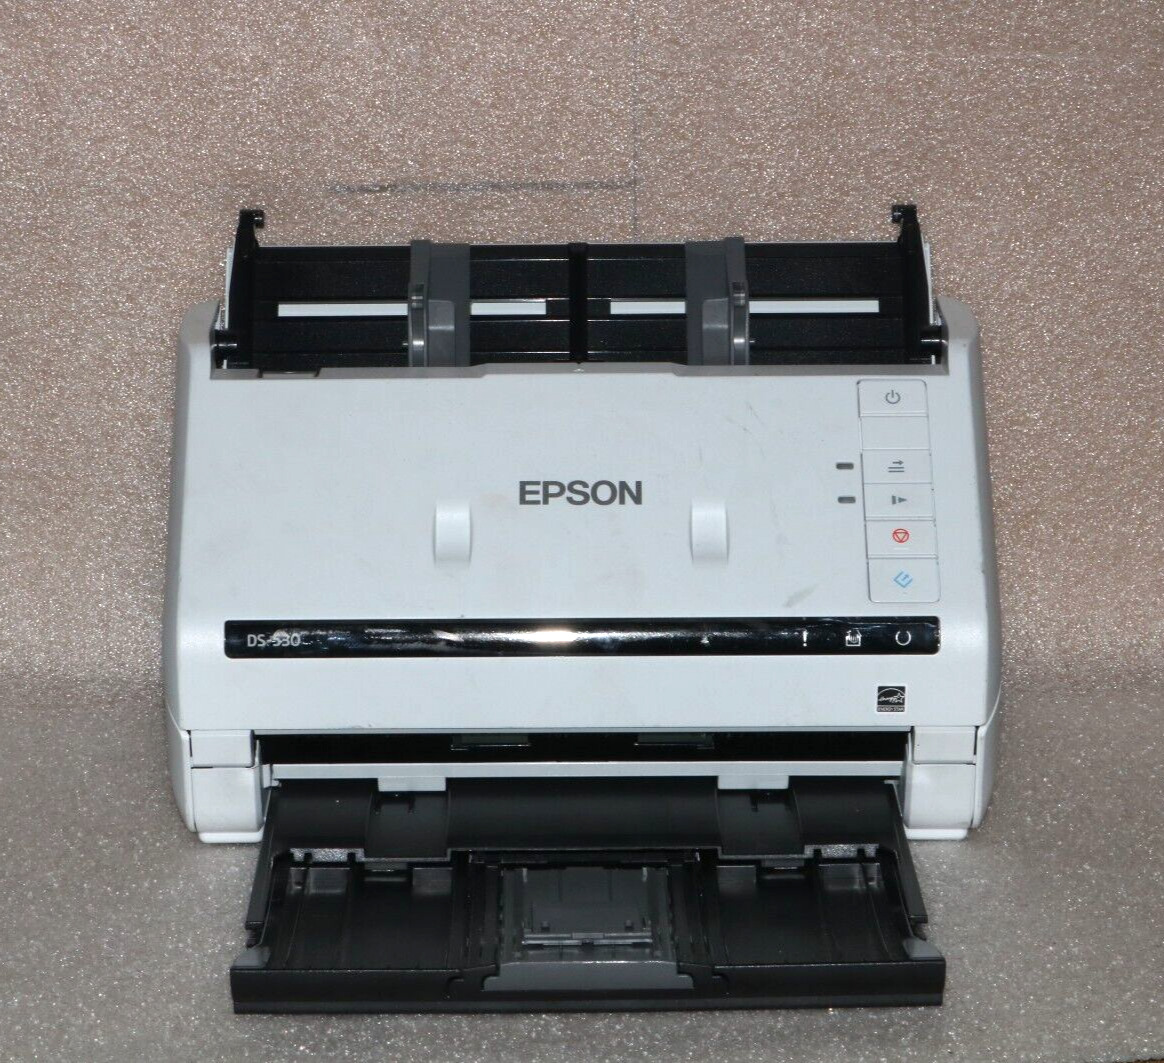 Epson DS-530 Color Duplex Document Scanner J381A, Pre-Owned .